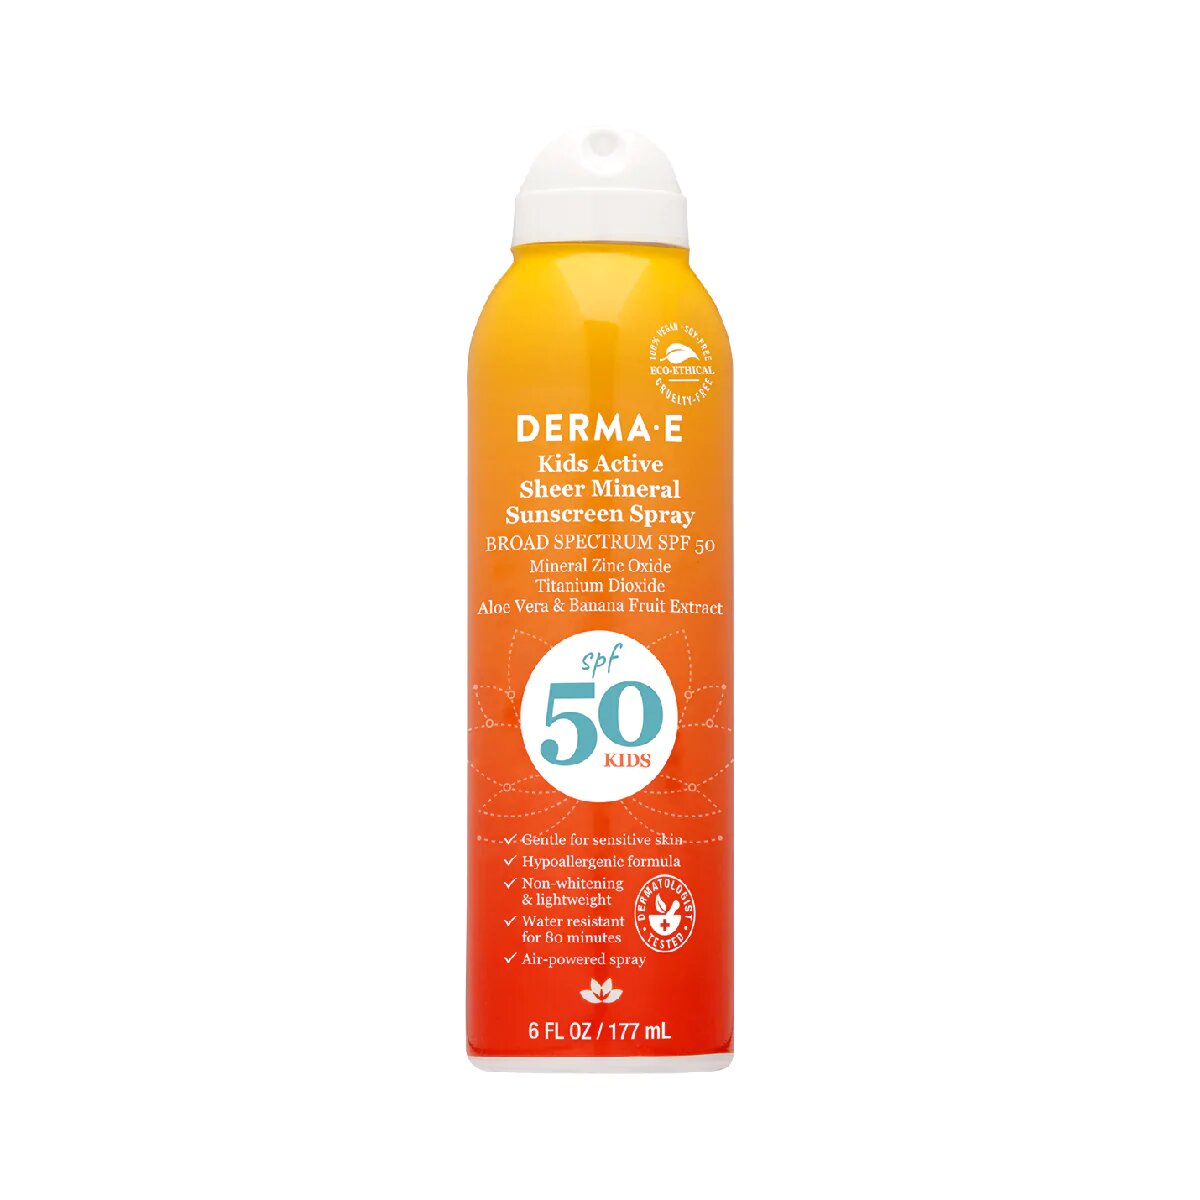 DERMA-E Kids Active Sheer Mineral Sonnenschutzspray